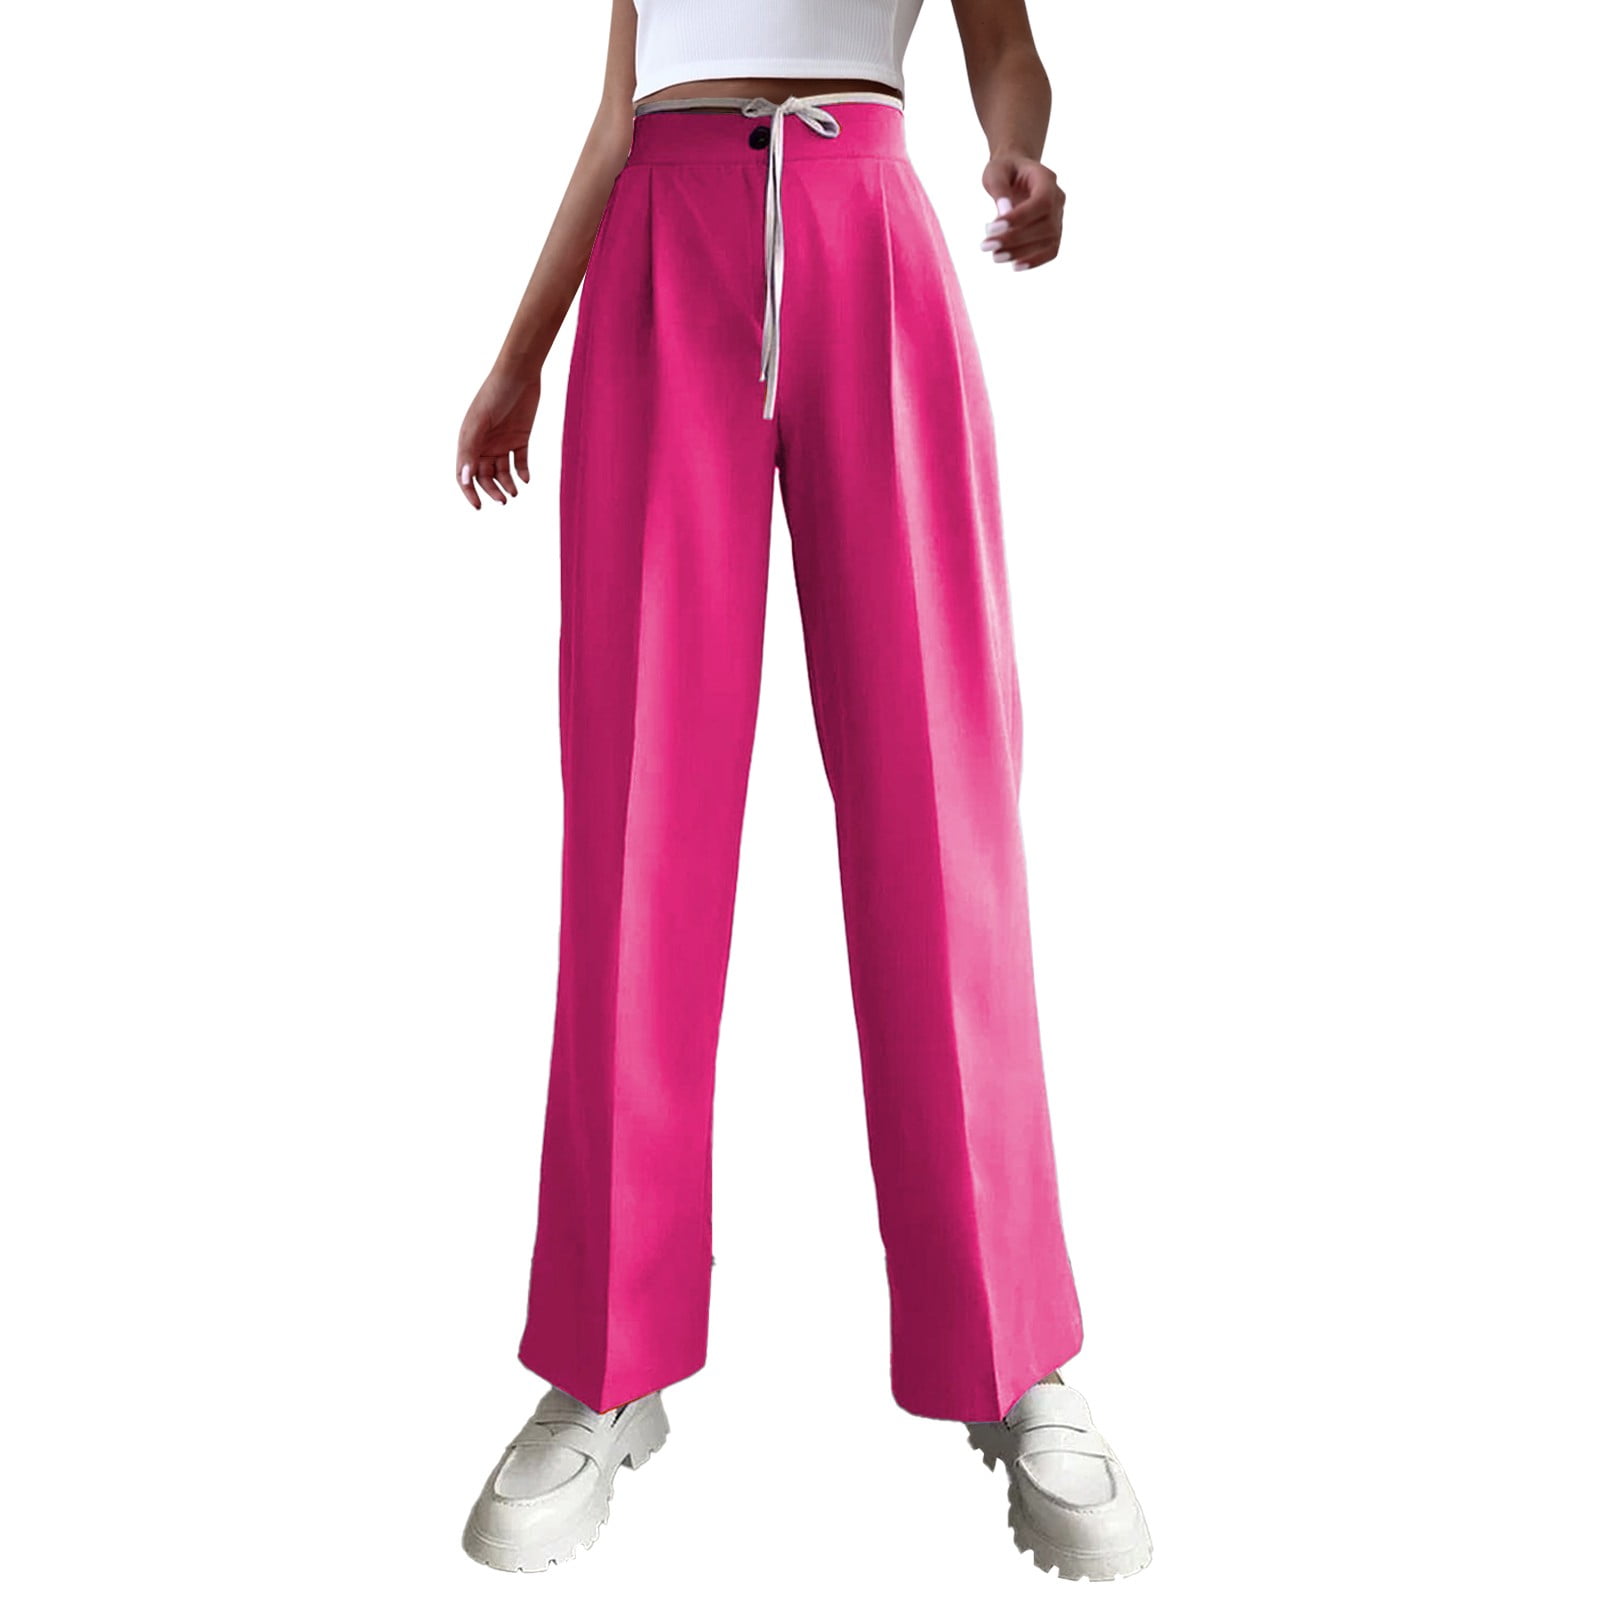 Designer Skinny Pants for Women  Shop Now on FARFETCH